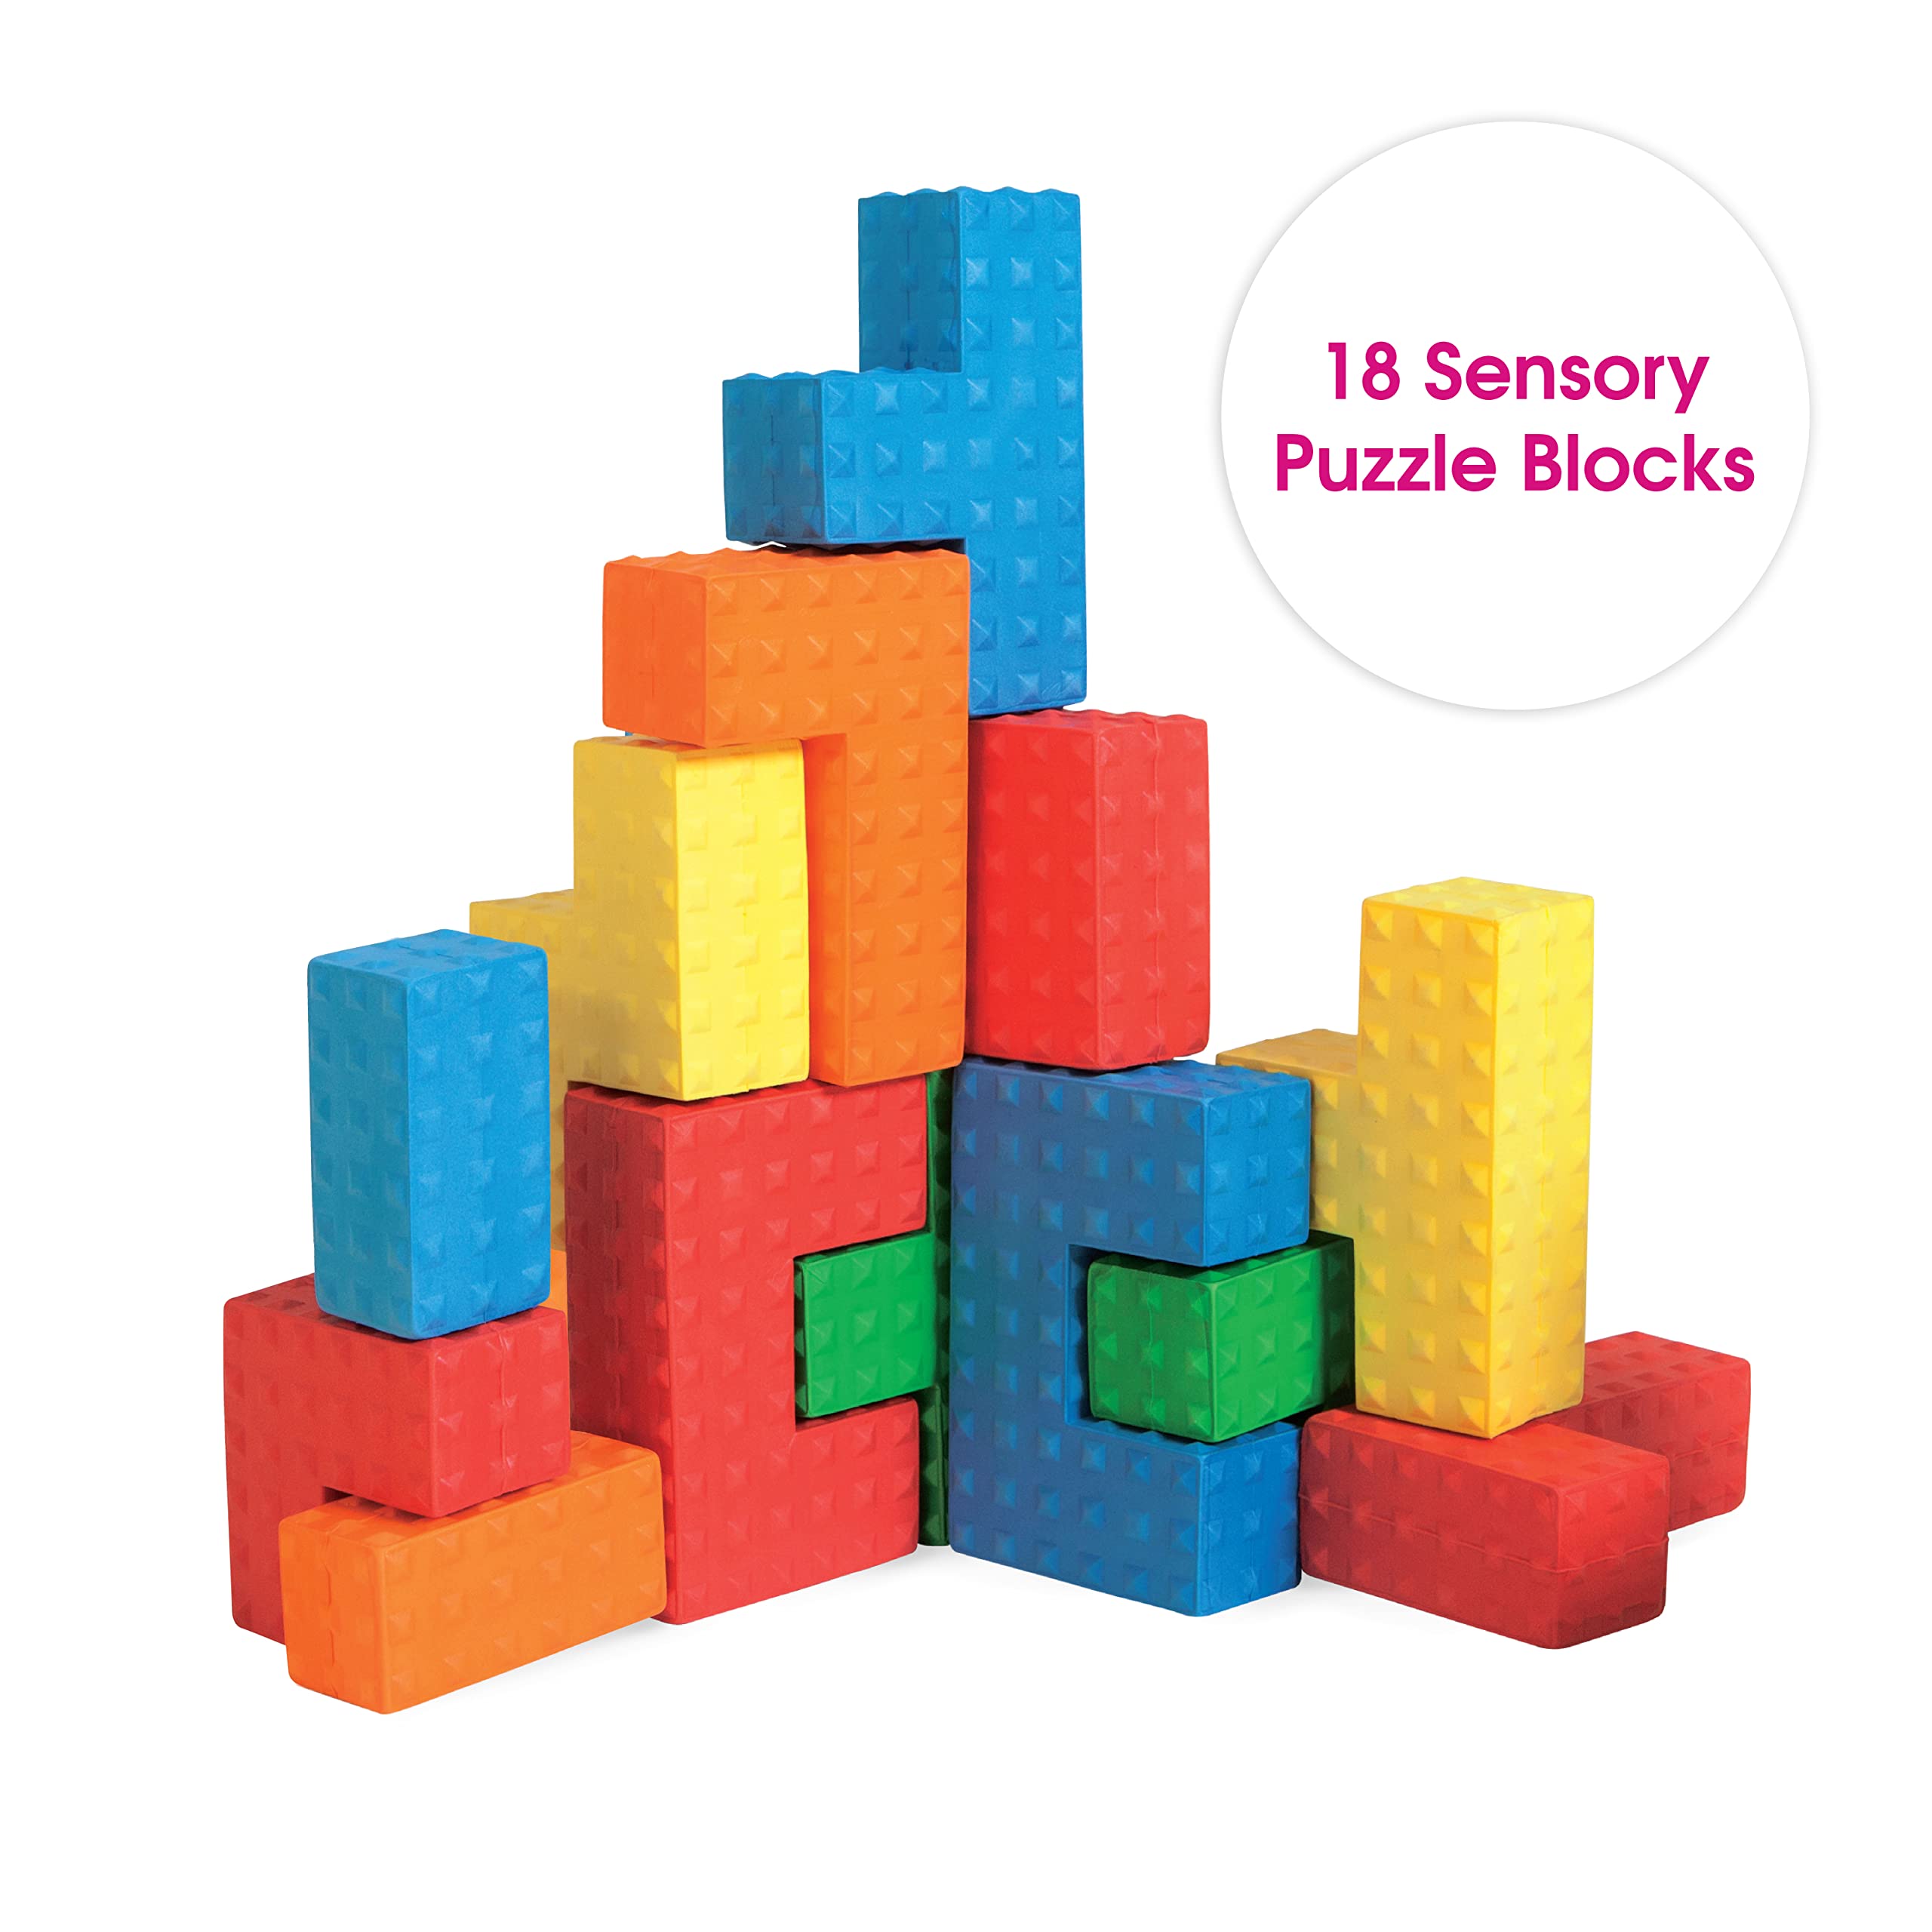 Edushape Sensory Puzzle Blocks, 18 PC Set - Colorful Textured Interlocking Construction Block Puzzles for Sensory Development in Toddlers & Kids - Soft Baby Blocks, STEM Educational Learning Toy